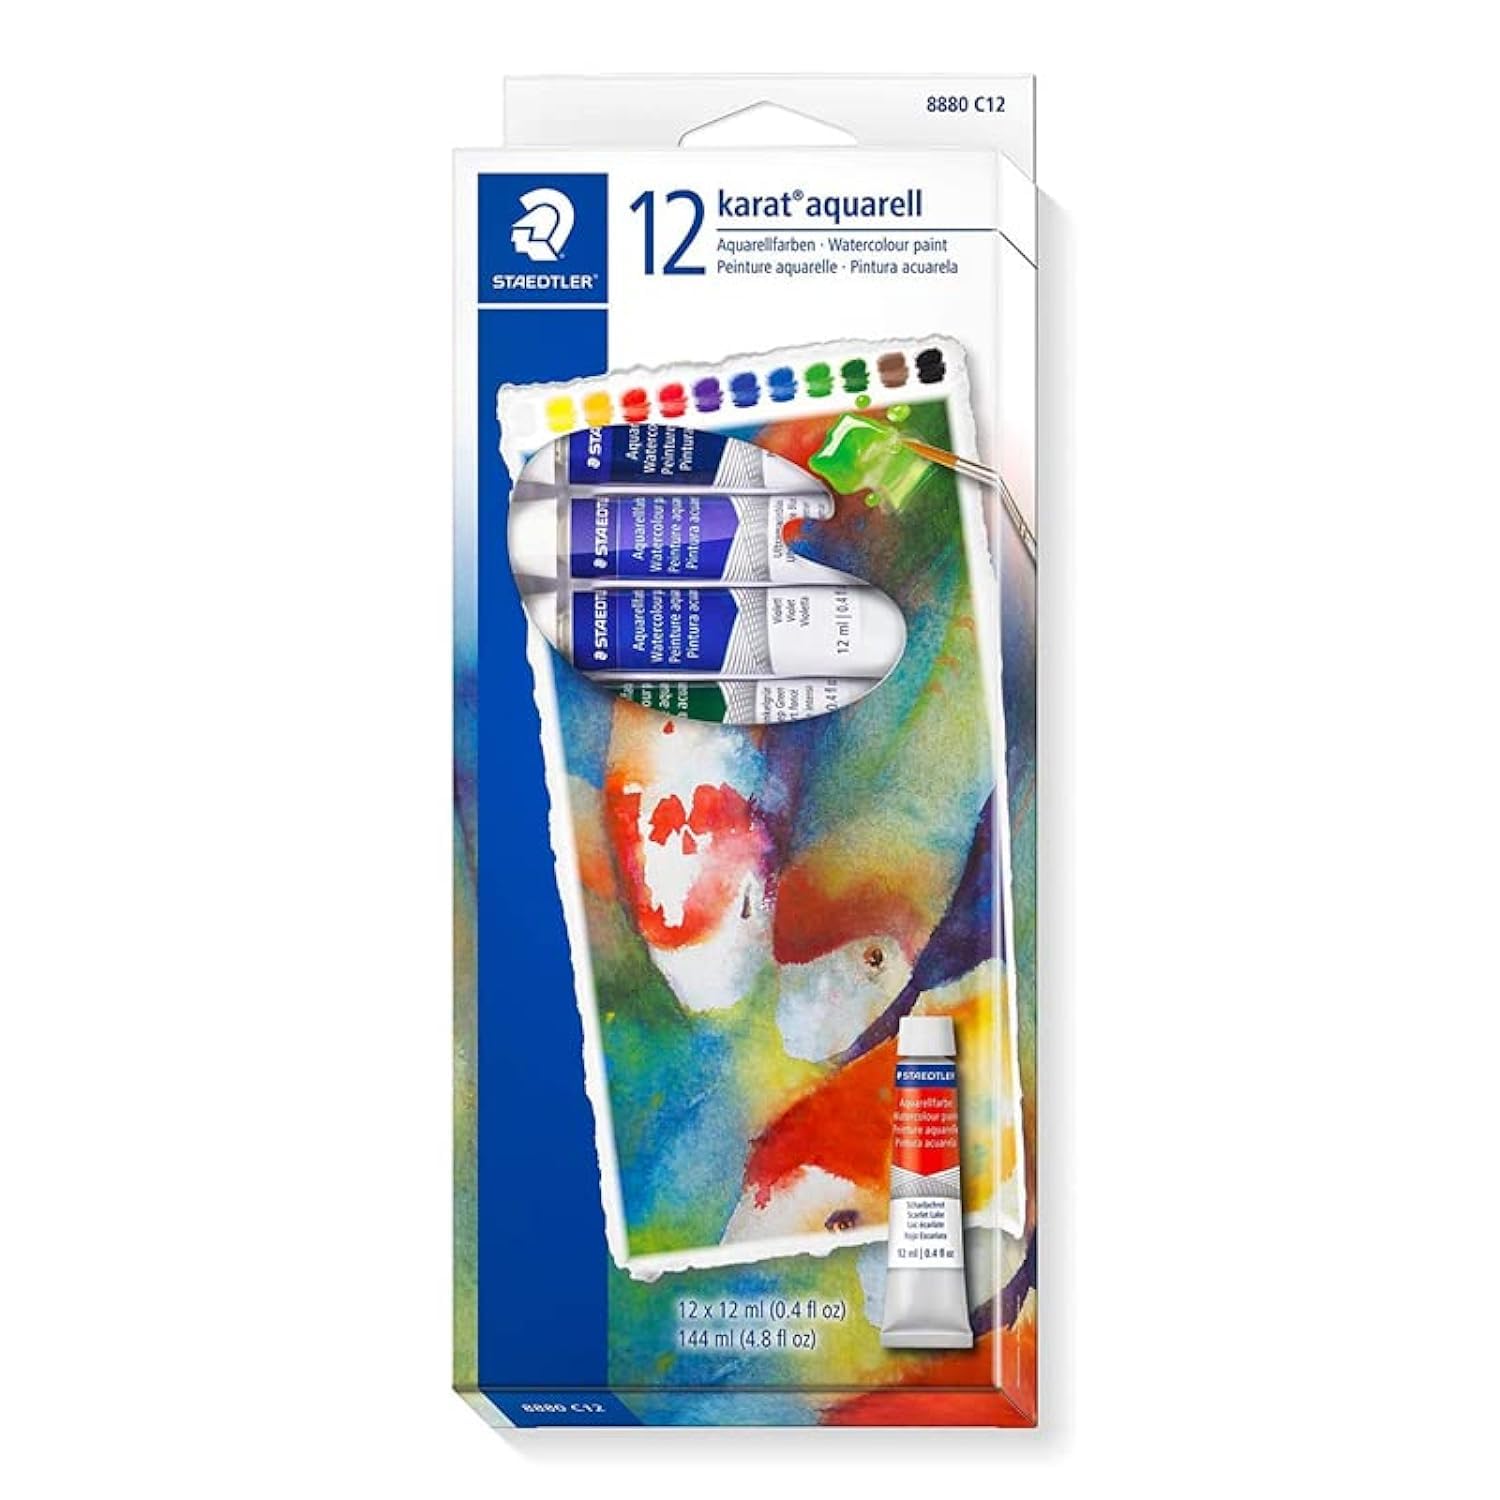 Staedtler Karat Aquarell Watercolour Set 12 x 12ml no. 8880 C12